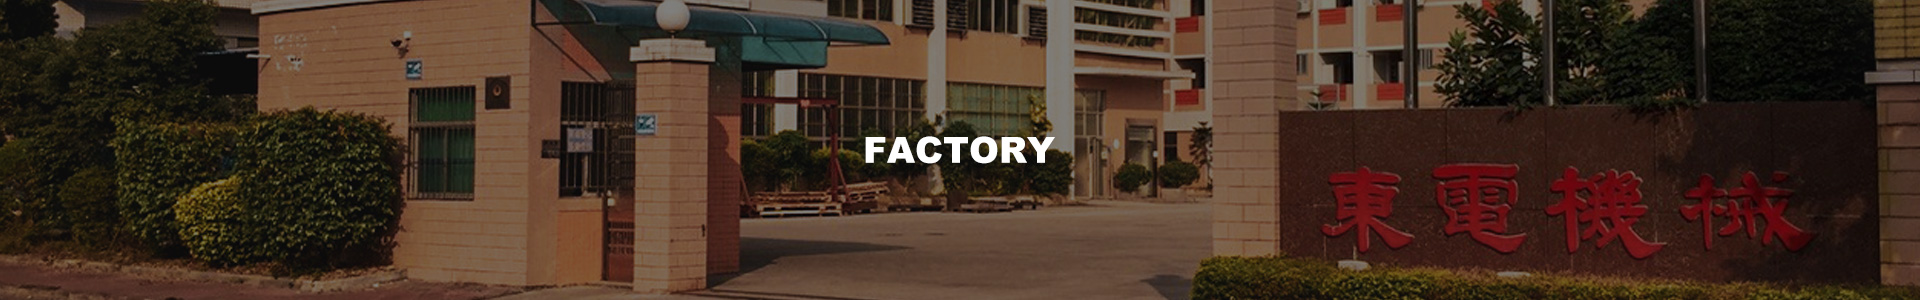 Toden Factory